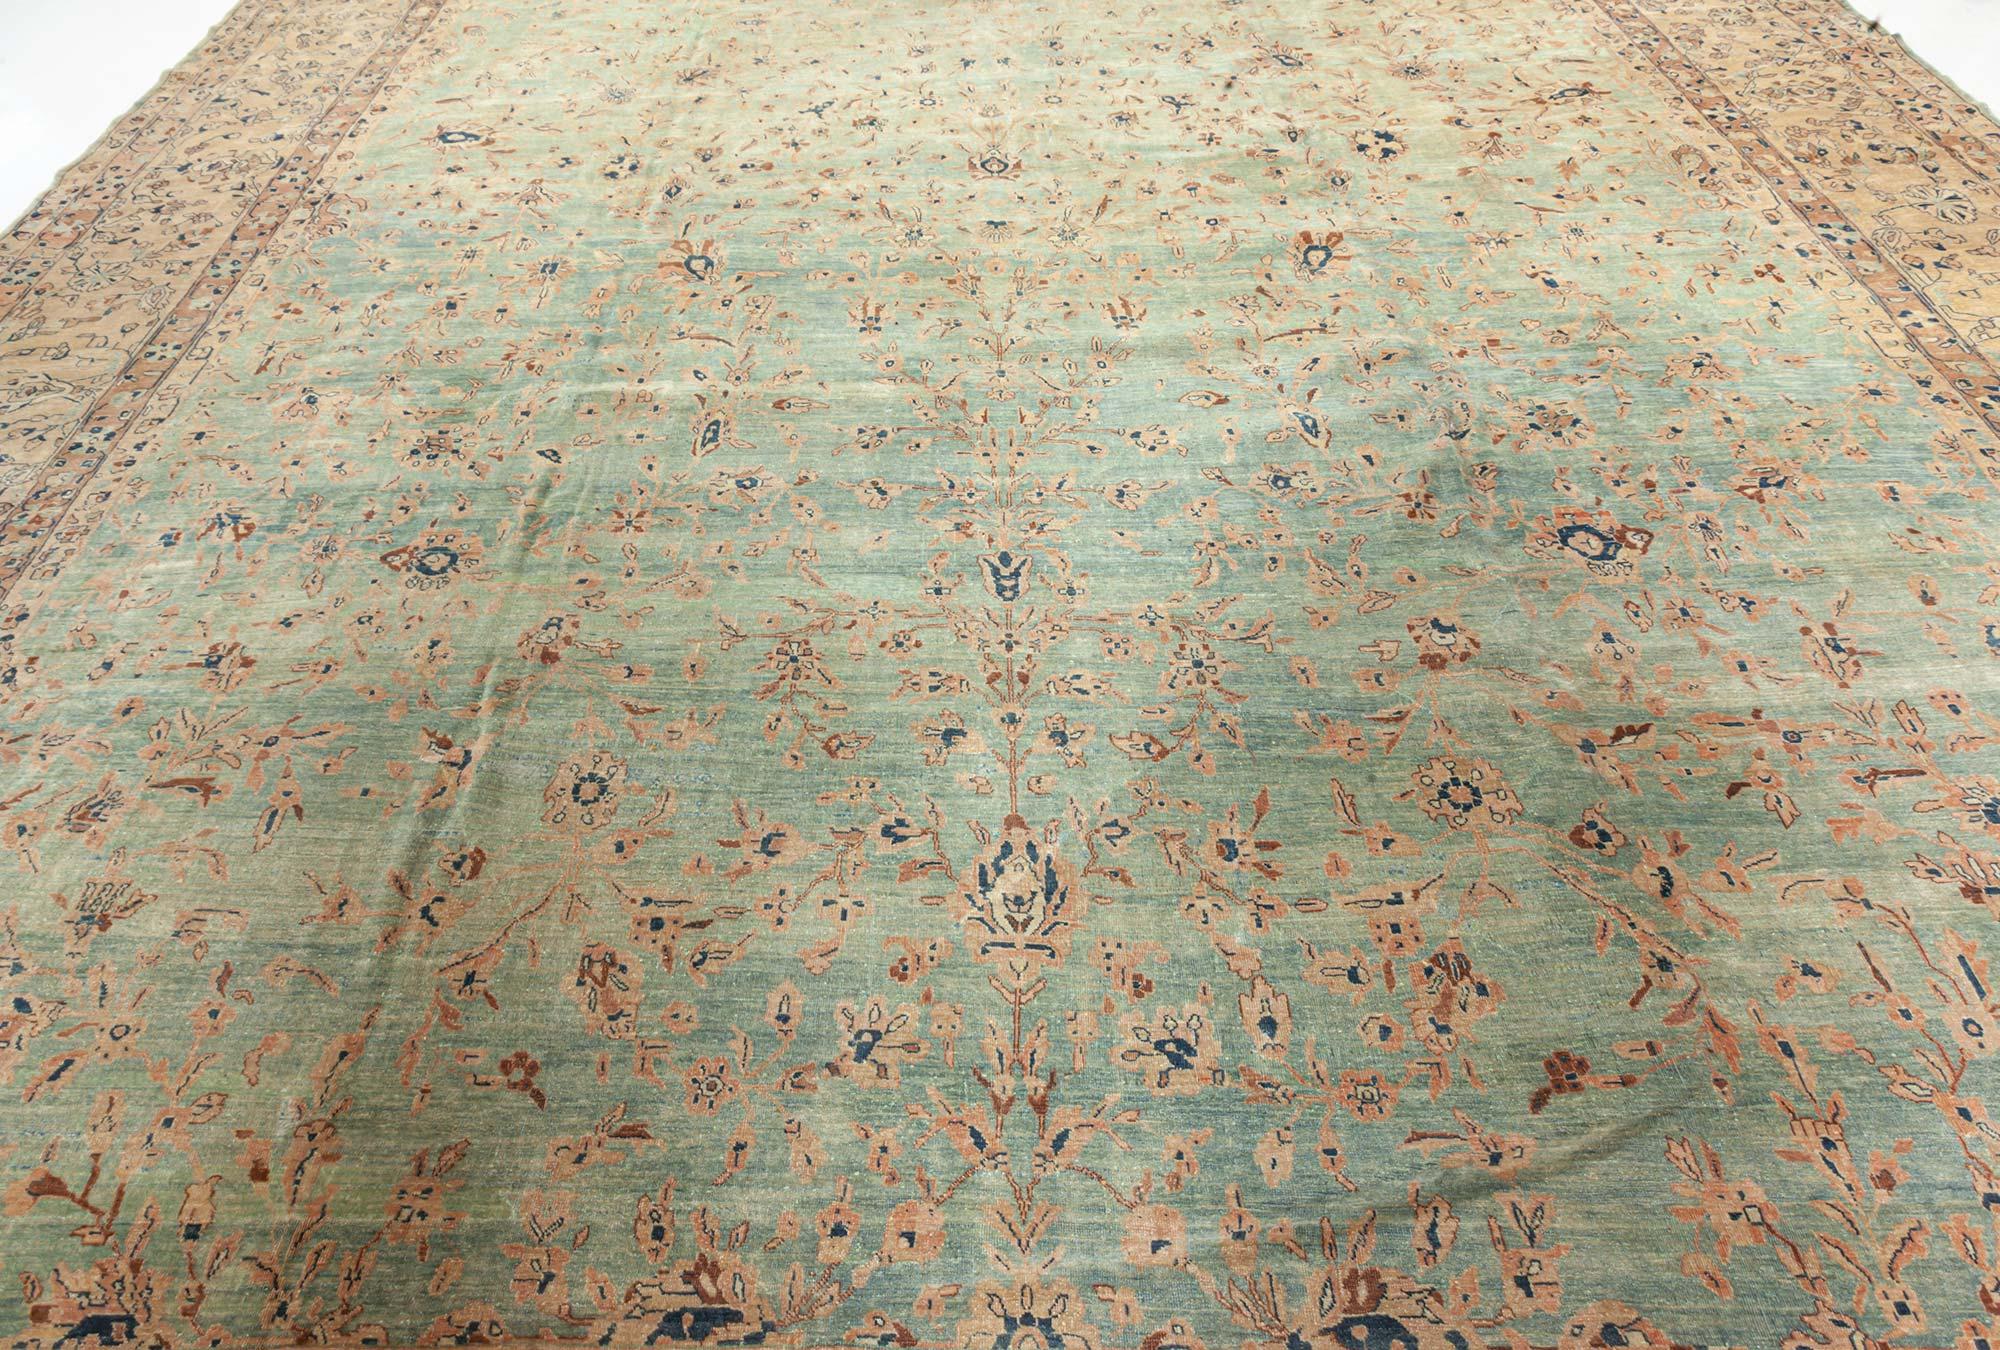 Authentic oversized antique Persian Sarouk rug
Size: 14'5